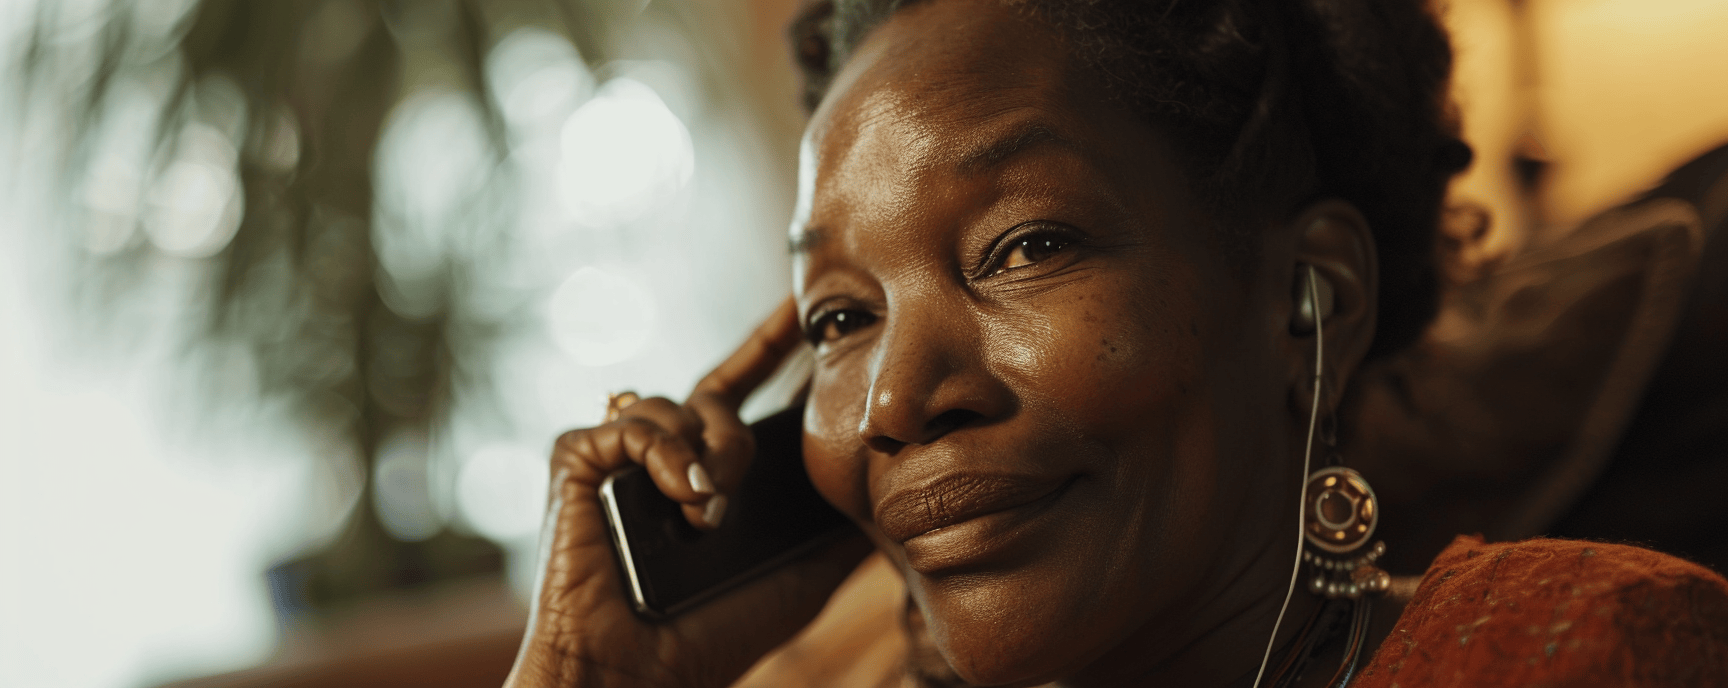 Black woman talking on phone using lifeline benefits